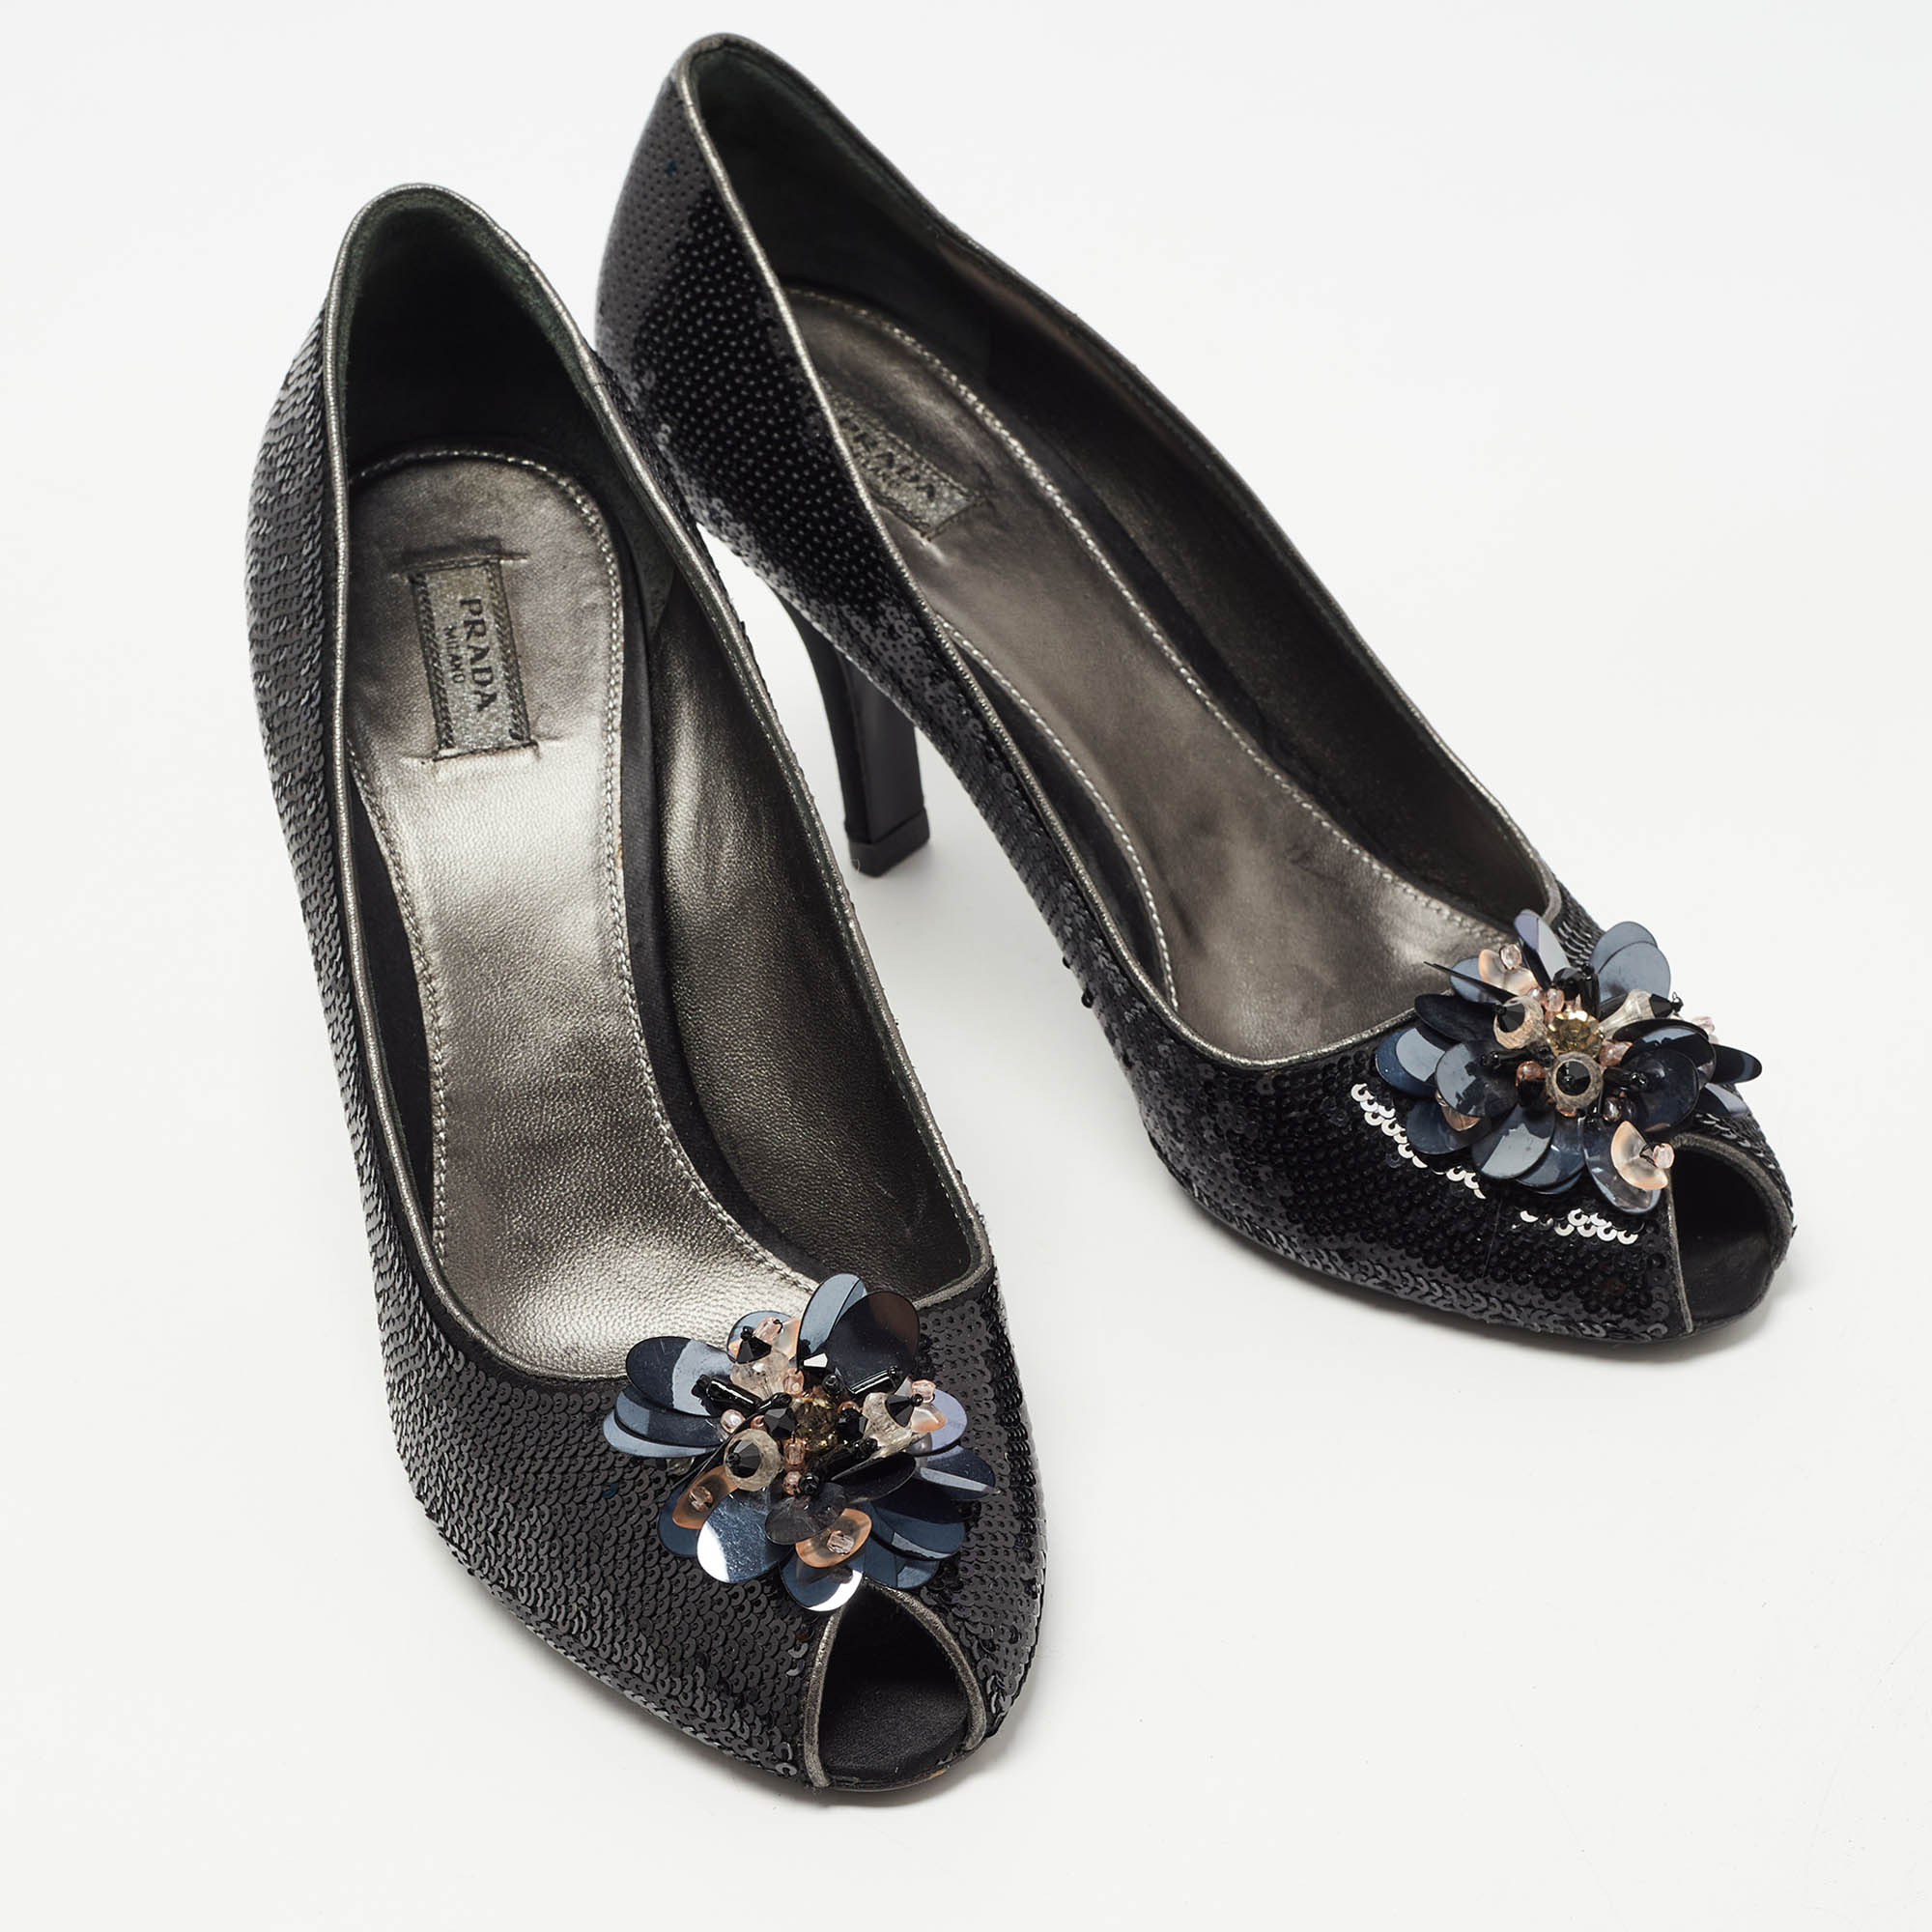 Prada Black Leather And Sequin Flower Embellished Peep Toe Pumps Size 40